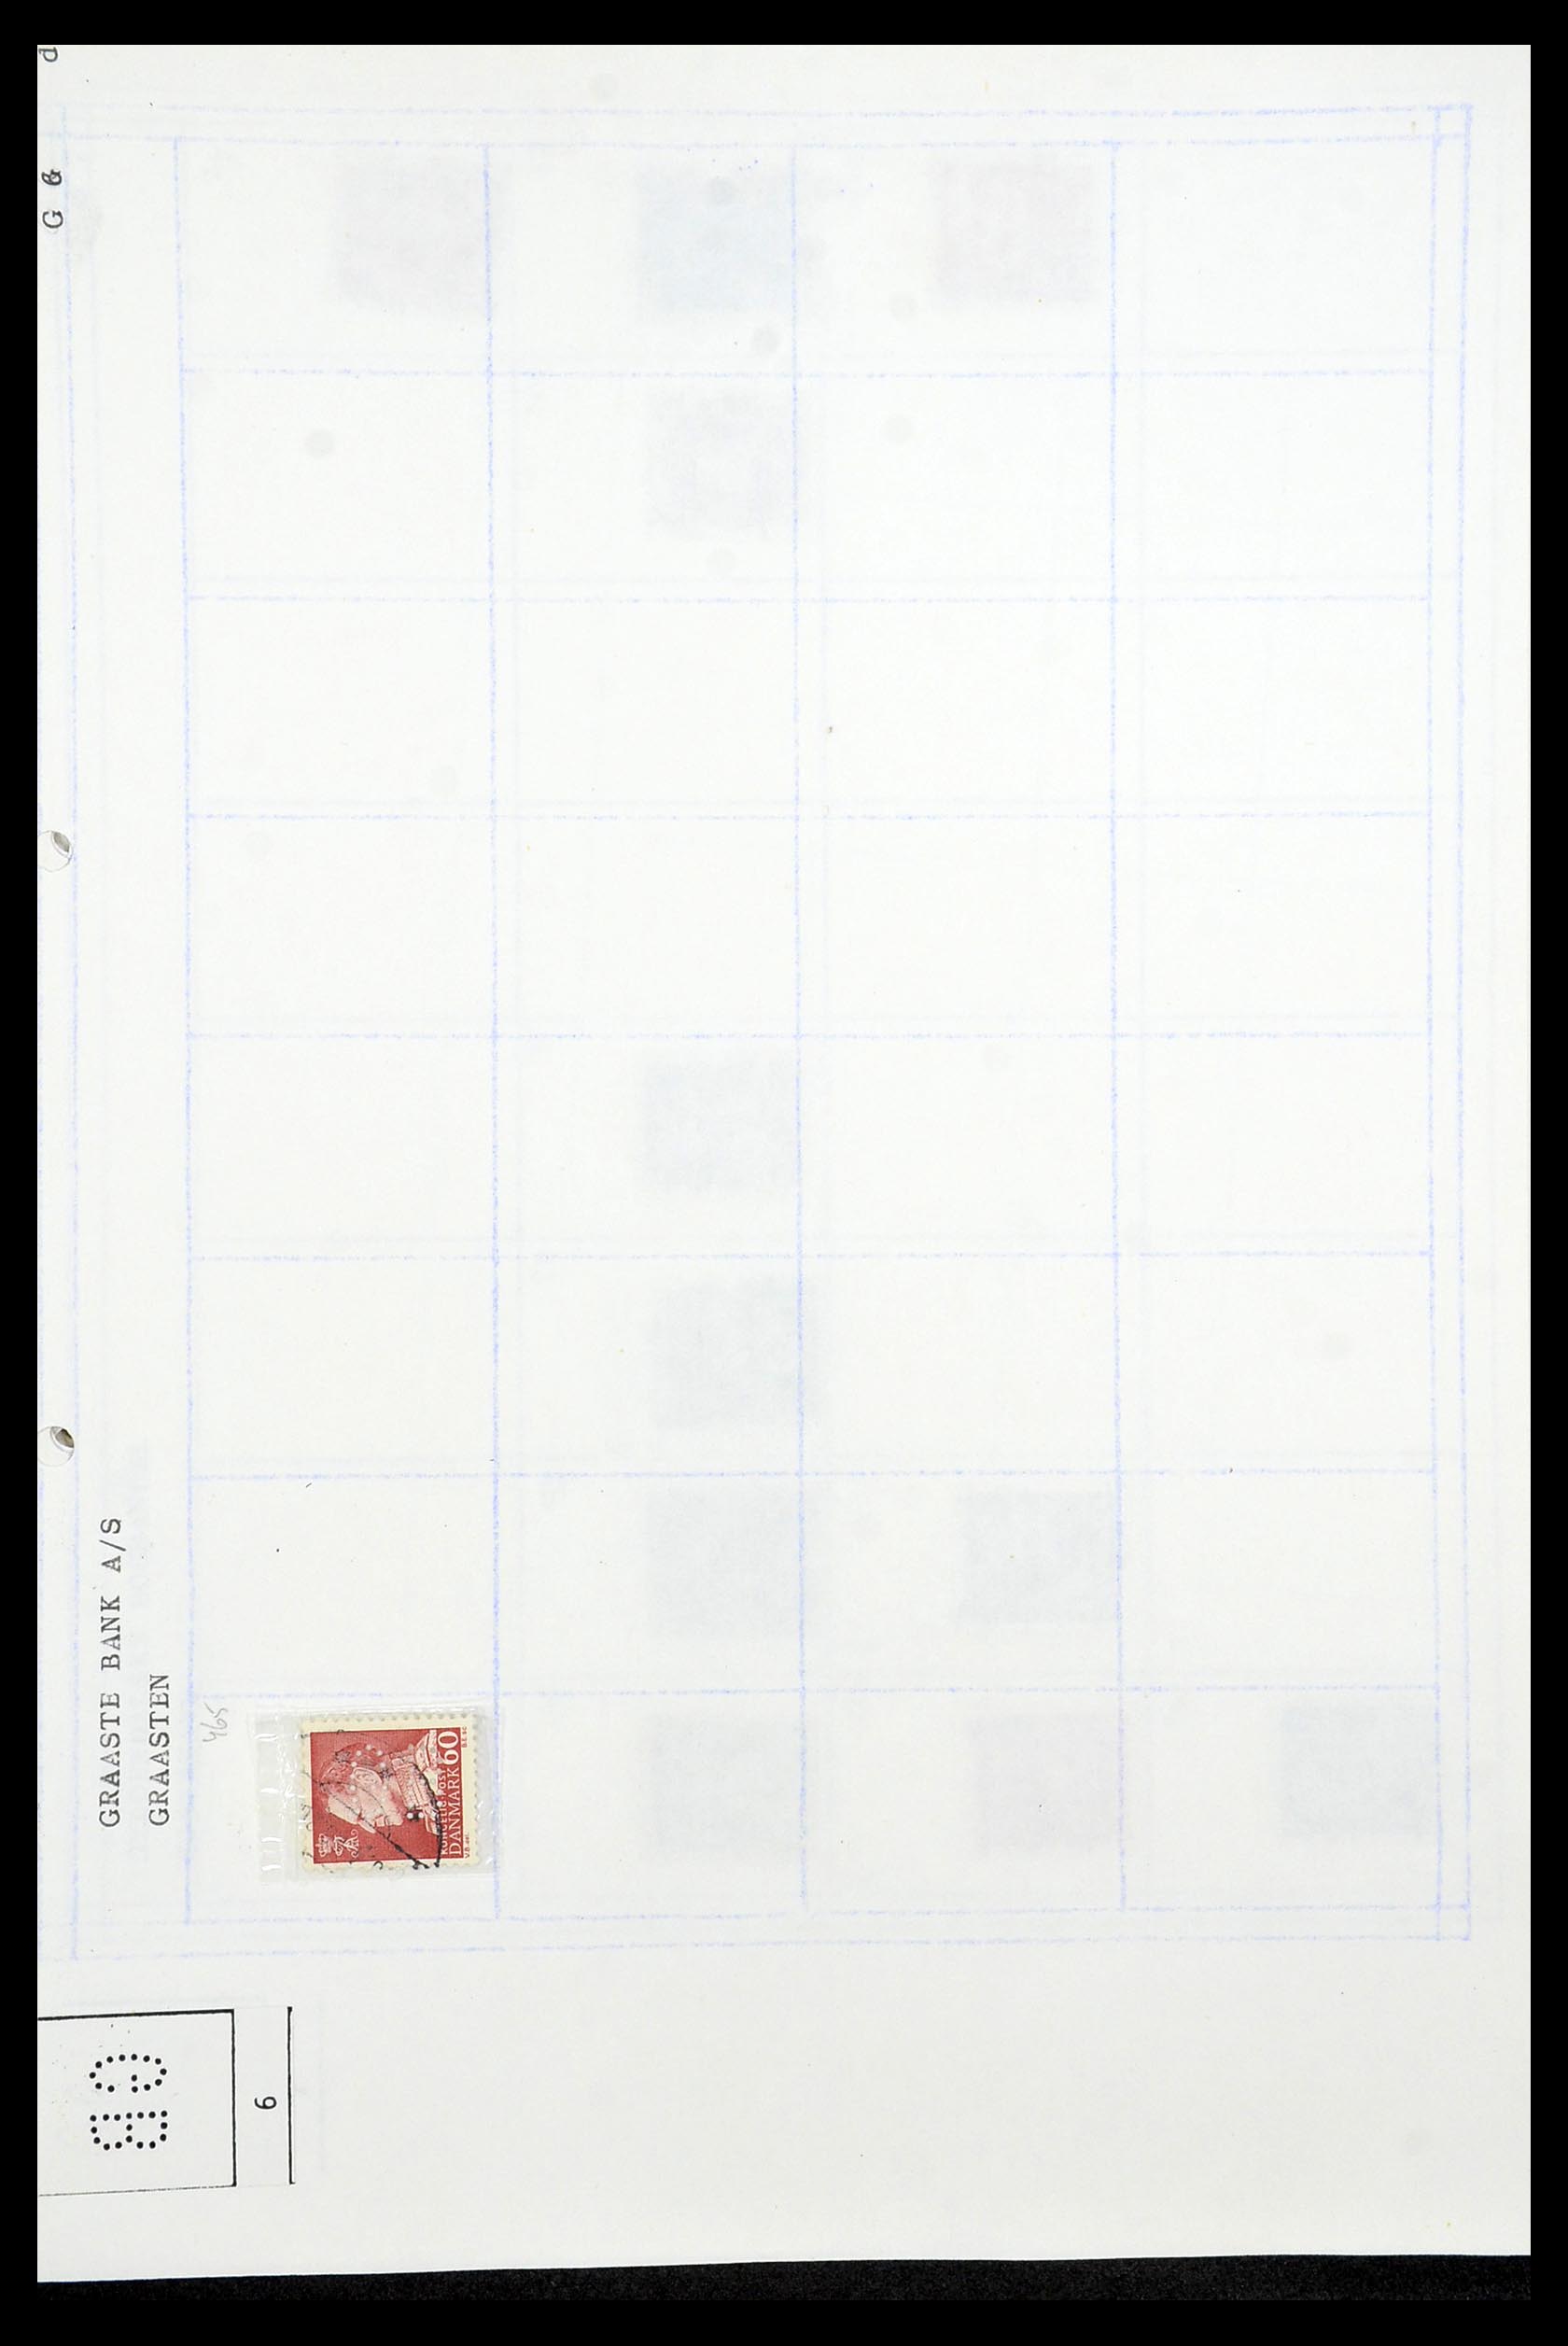 34415 110 - Stamp Collection 34415 Denmark perfins 1875-1980.